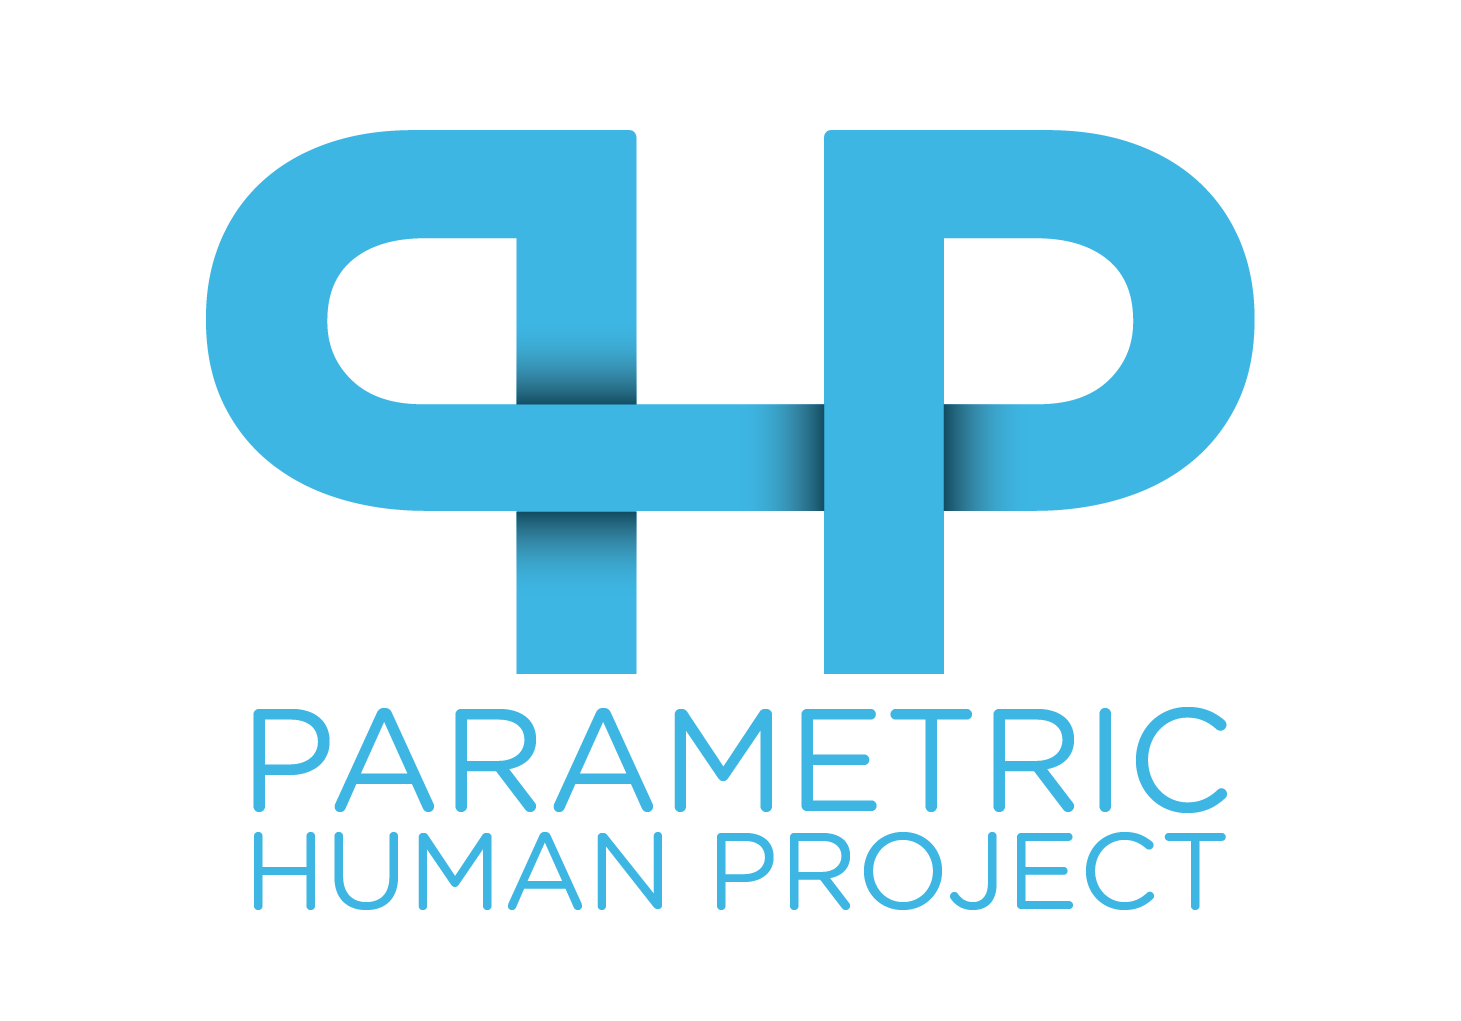 Parametric Human Project